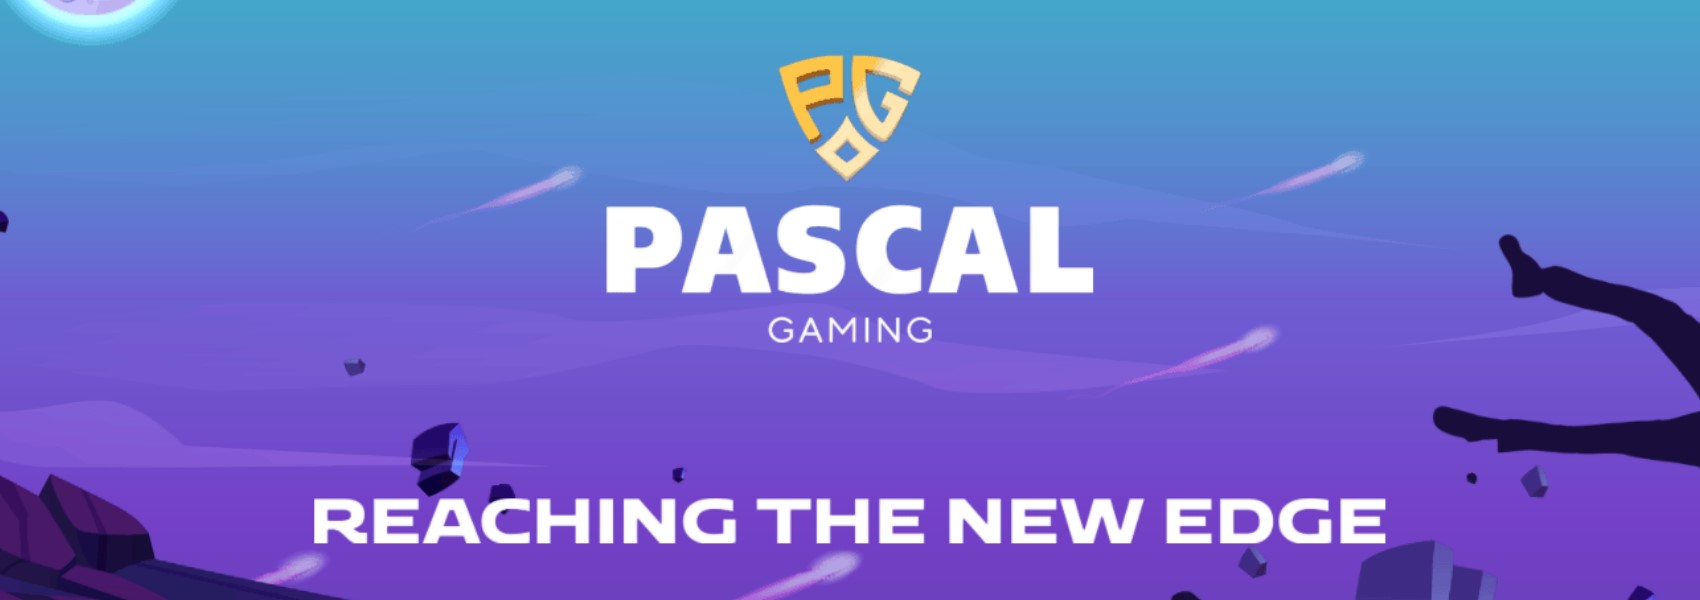 Pascal Gaming oyun sağlayıcısı